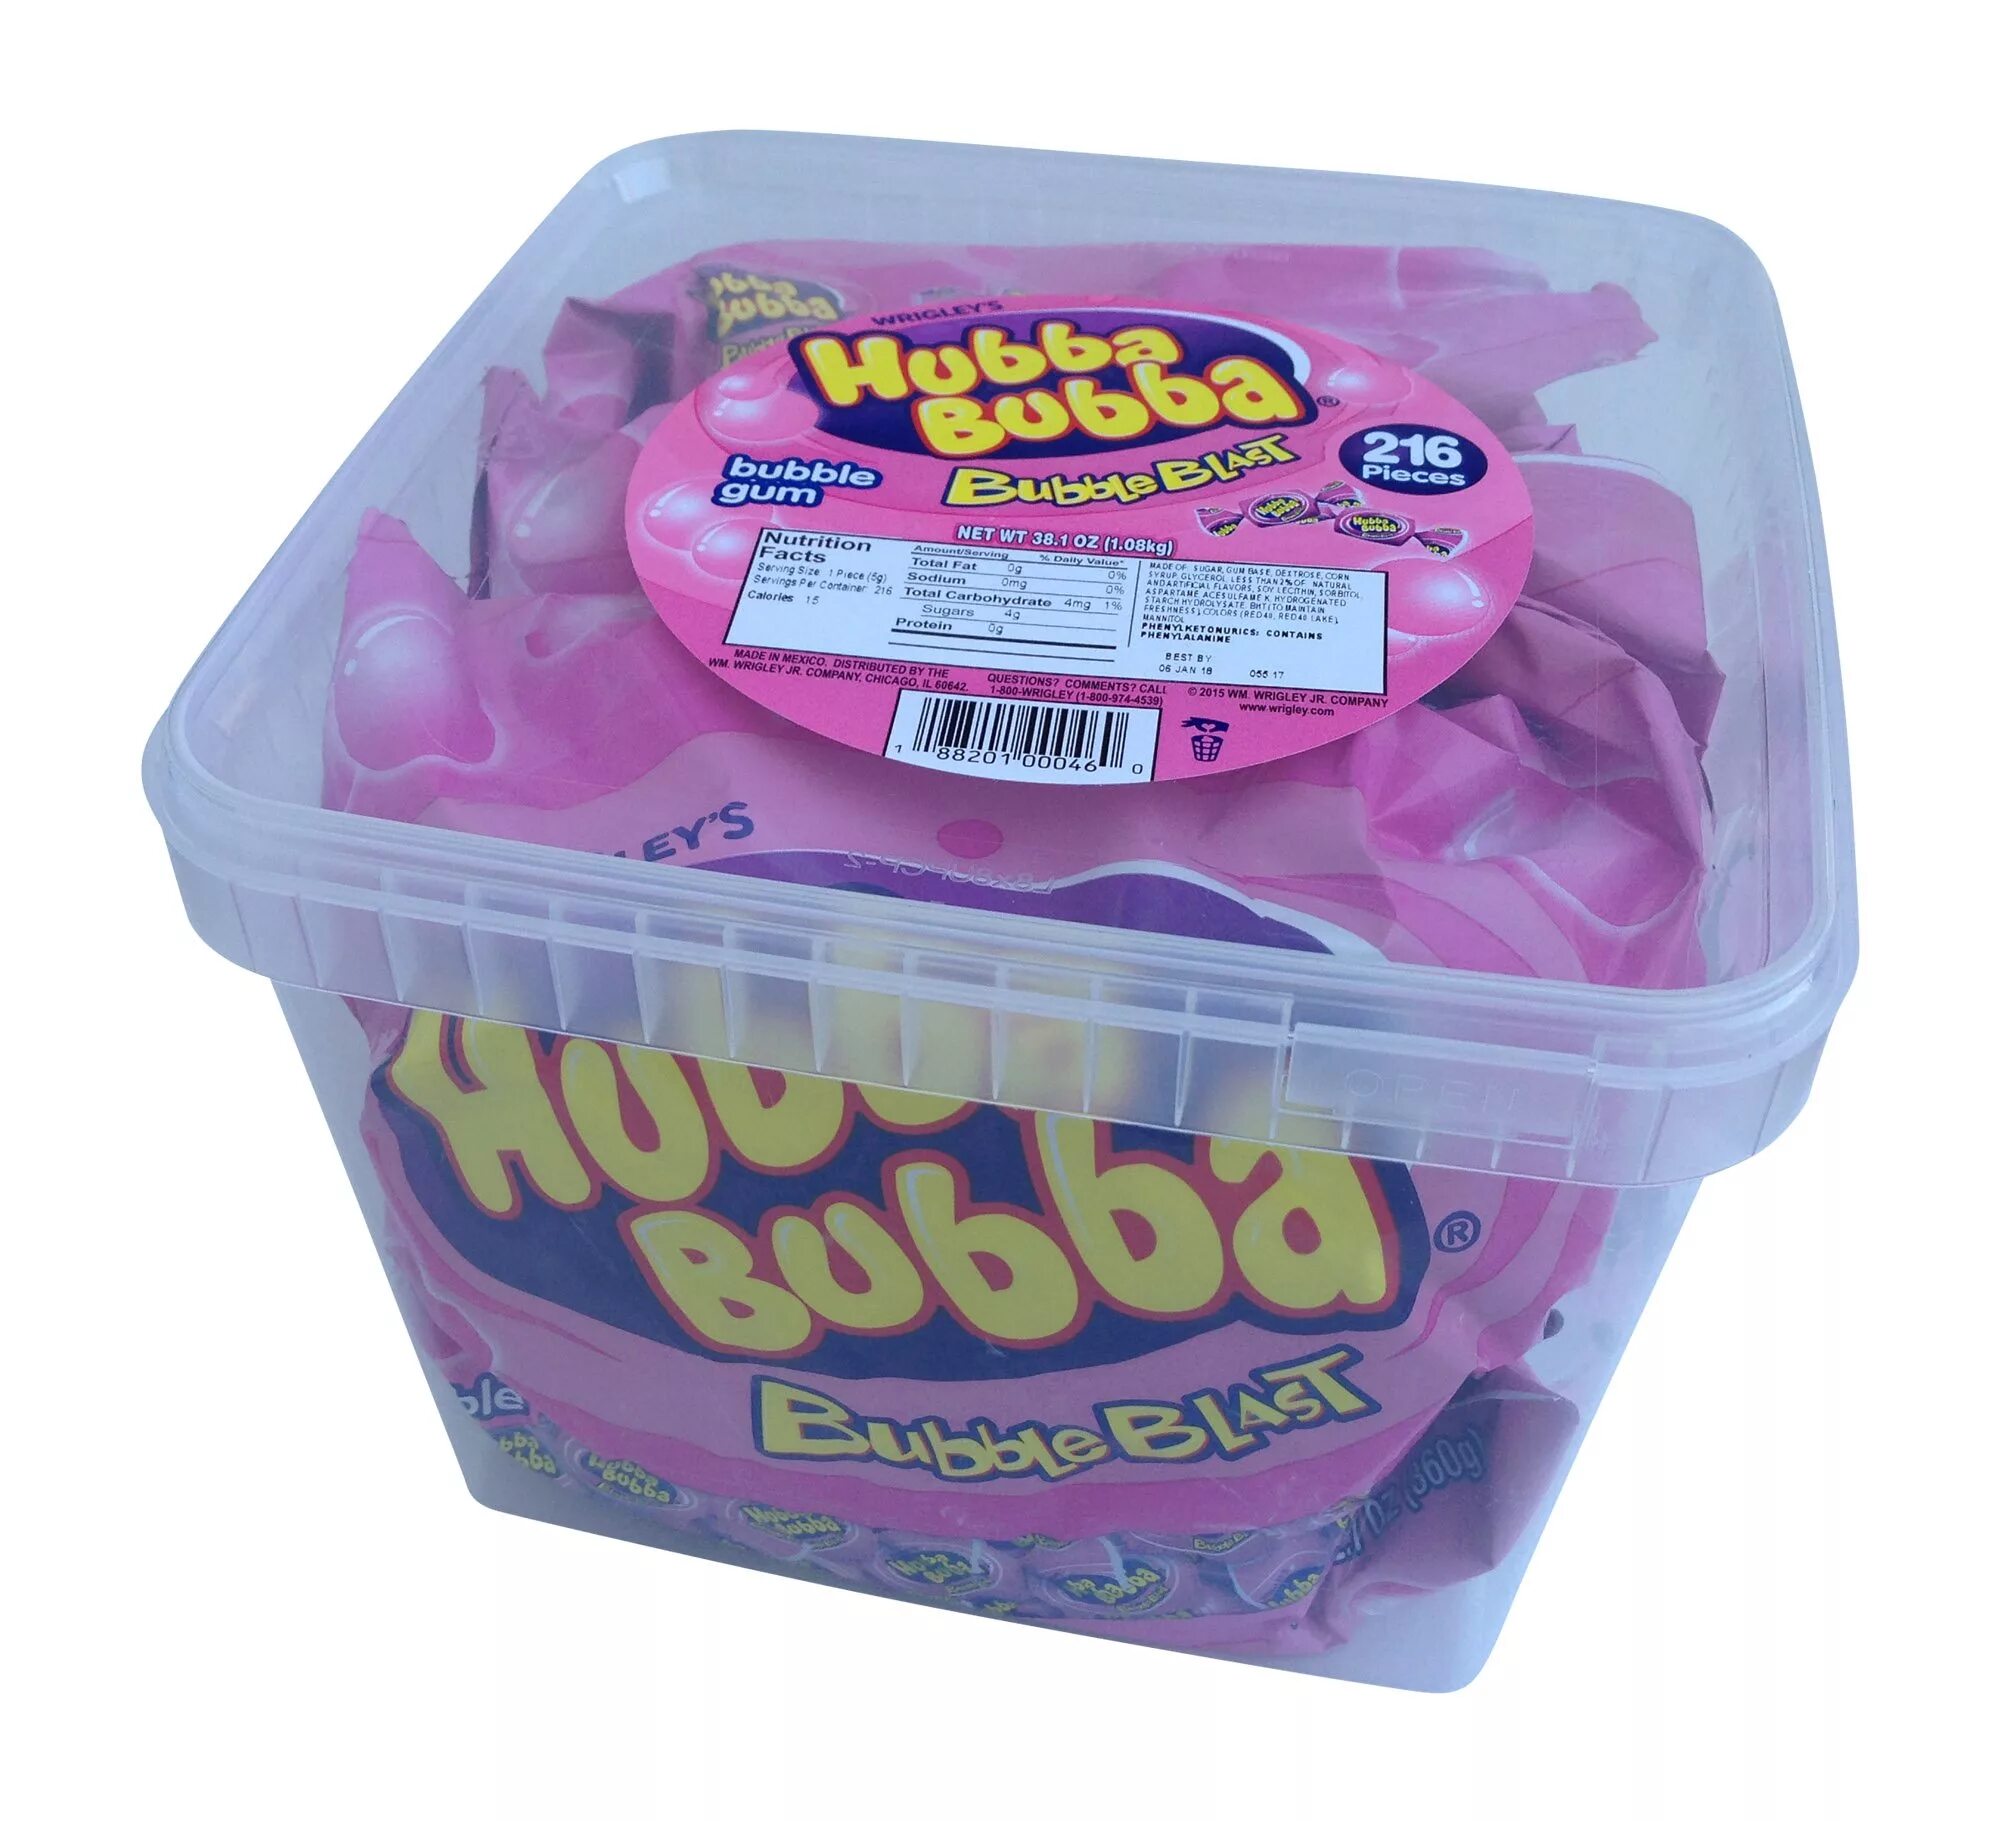 Hubba Bubba Bubble. Хубба Бубба Bubble Gum. Hubba Bubba 2008. Хубба Бубба сахарная вата. Bubble gum перевод